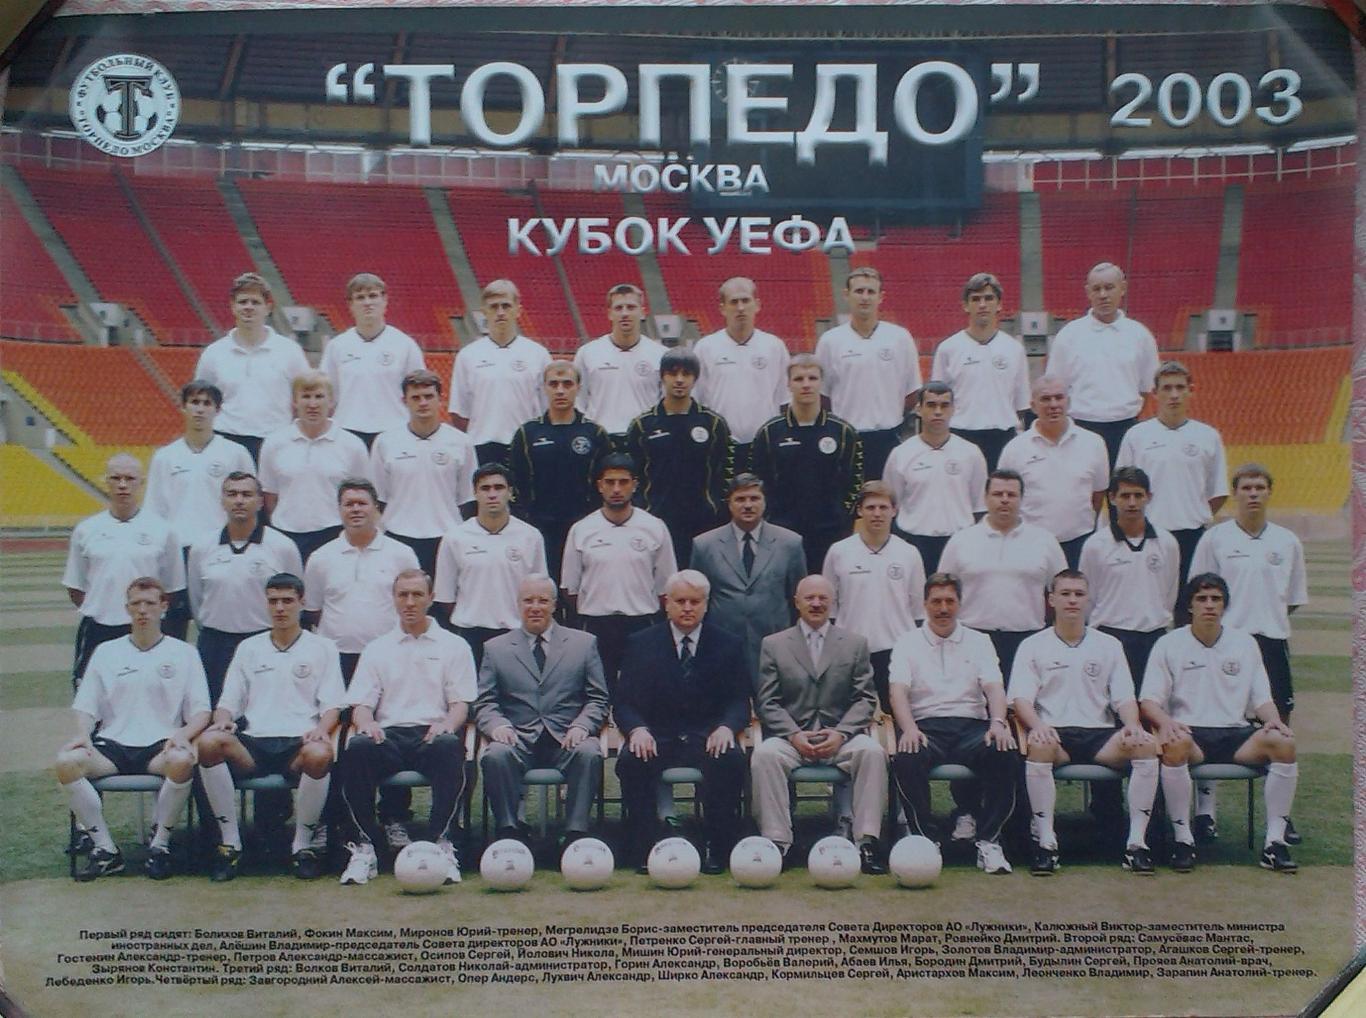 Торпедо Москва 2003. Кубок УЕФА. Фотография команды. Постер/плакат